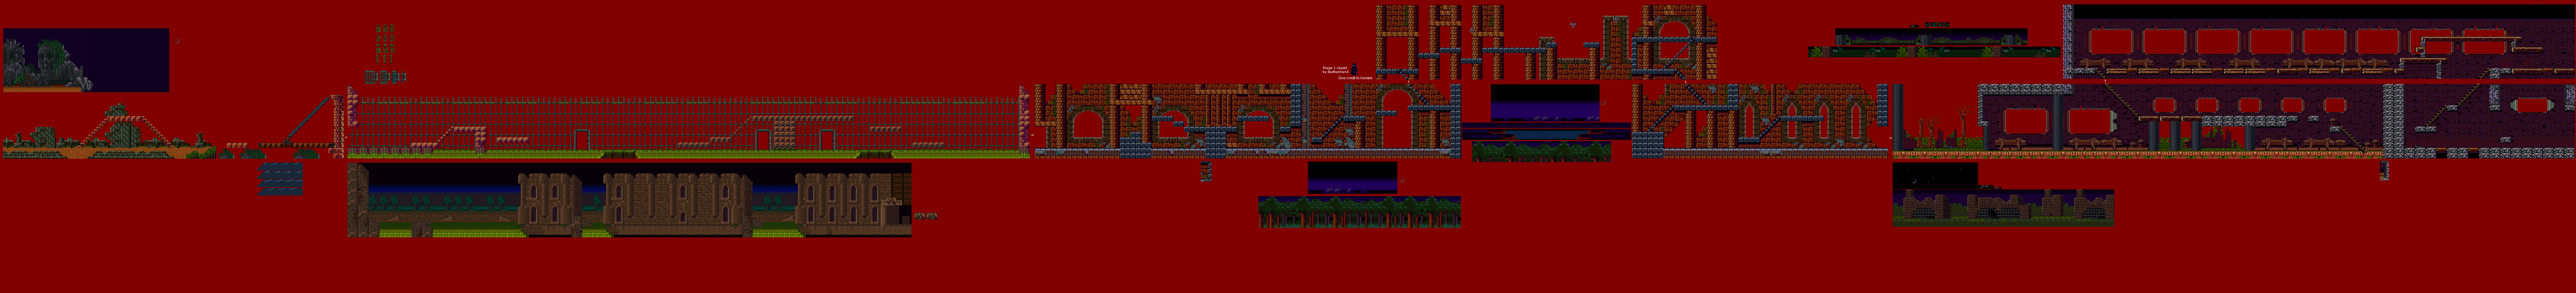 Super Castlevania IV - Stage 01: Castle Entrance